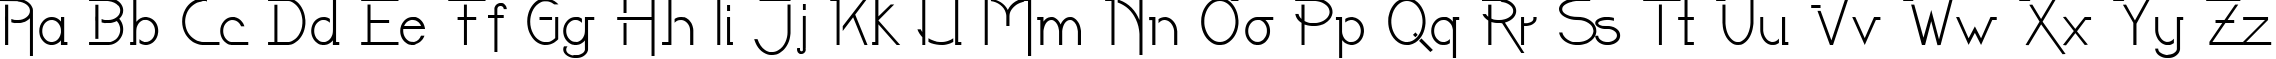 Пример написания английского алфавита шрифтом LateNite